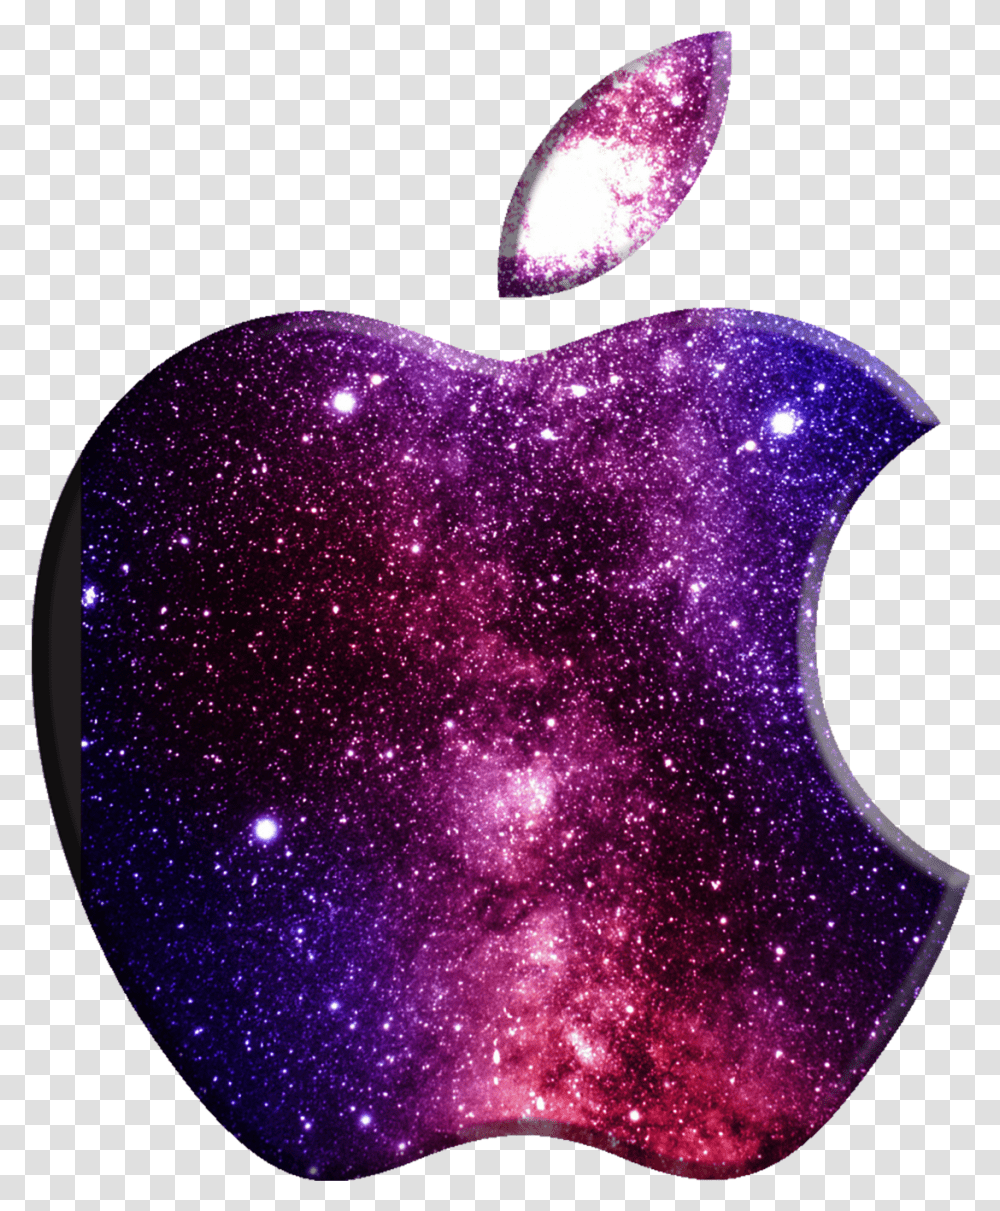 Apple Images Free Download Real Cool Apple Logo Background, Purple, Light, Heart, Glitter Transparent Png